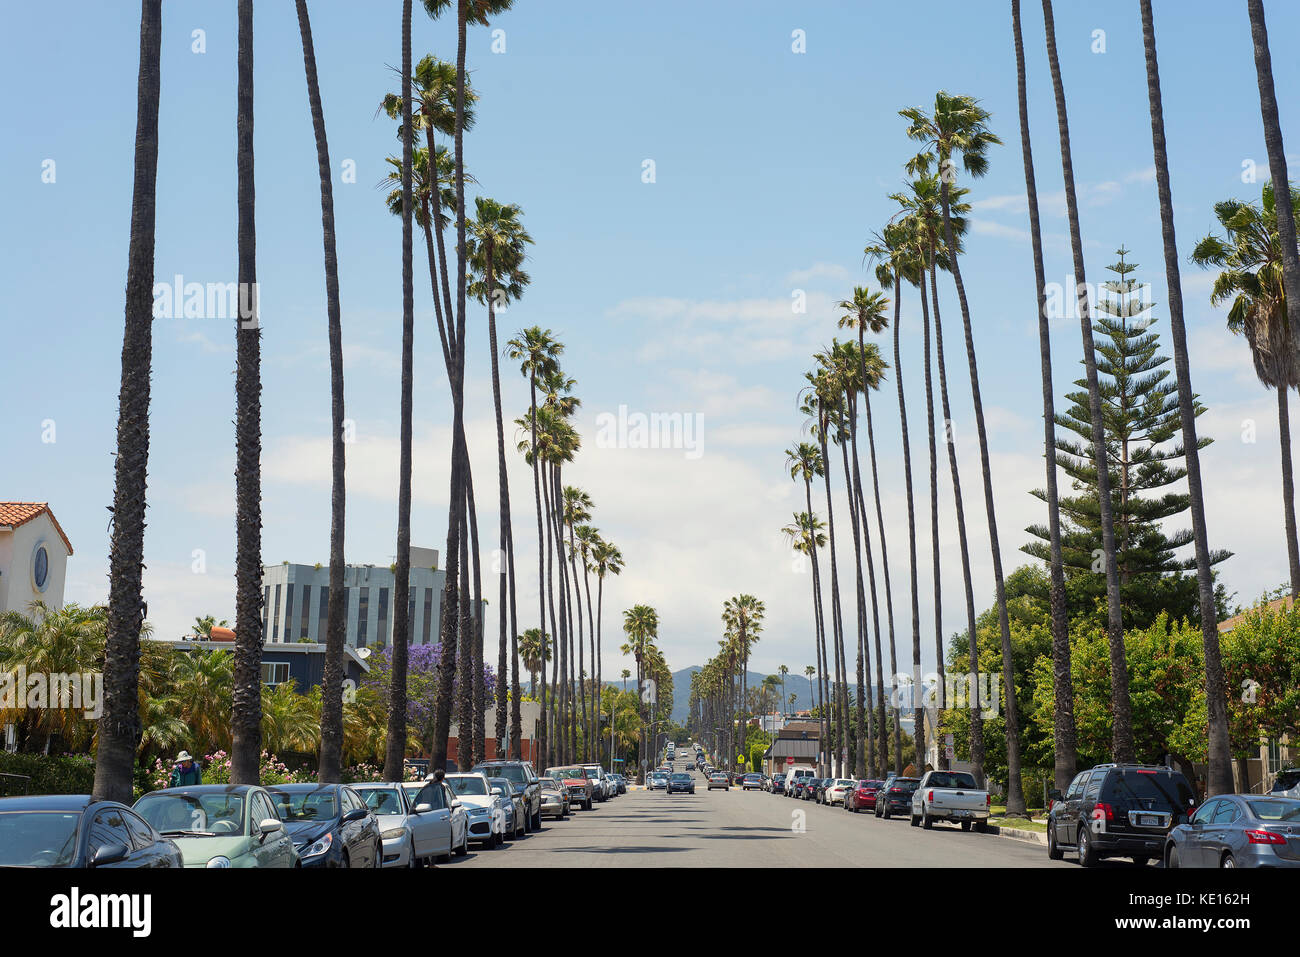 Palm trees lining the road in Santa Monica, Los Angeles, California. Stock Photo